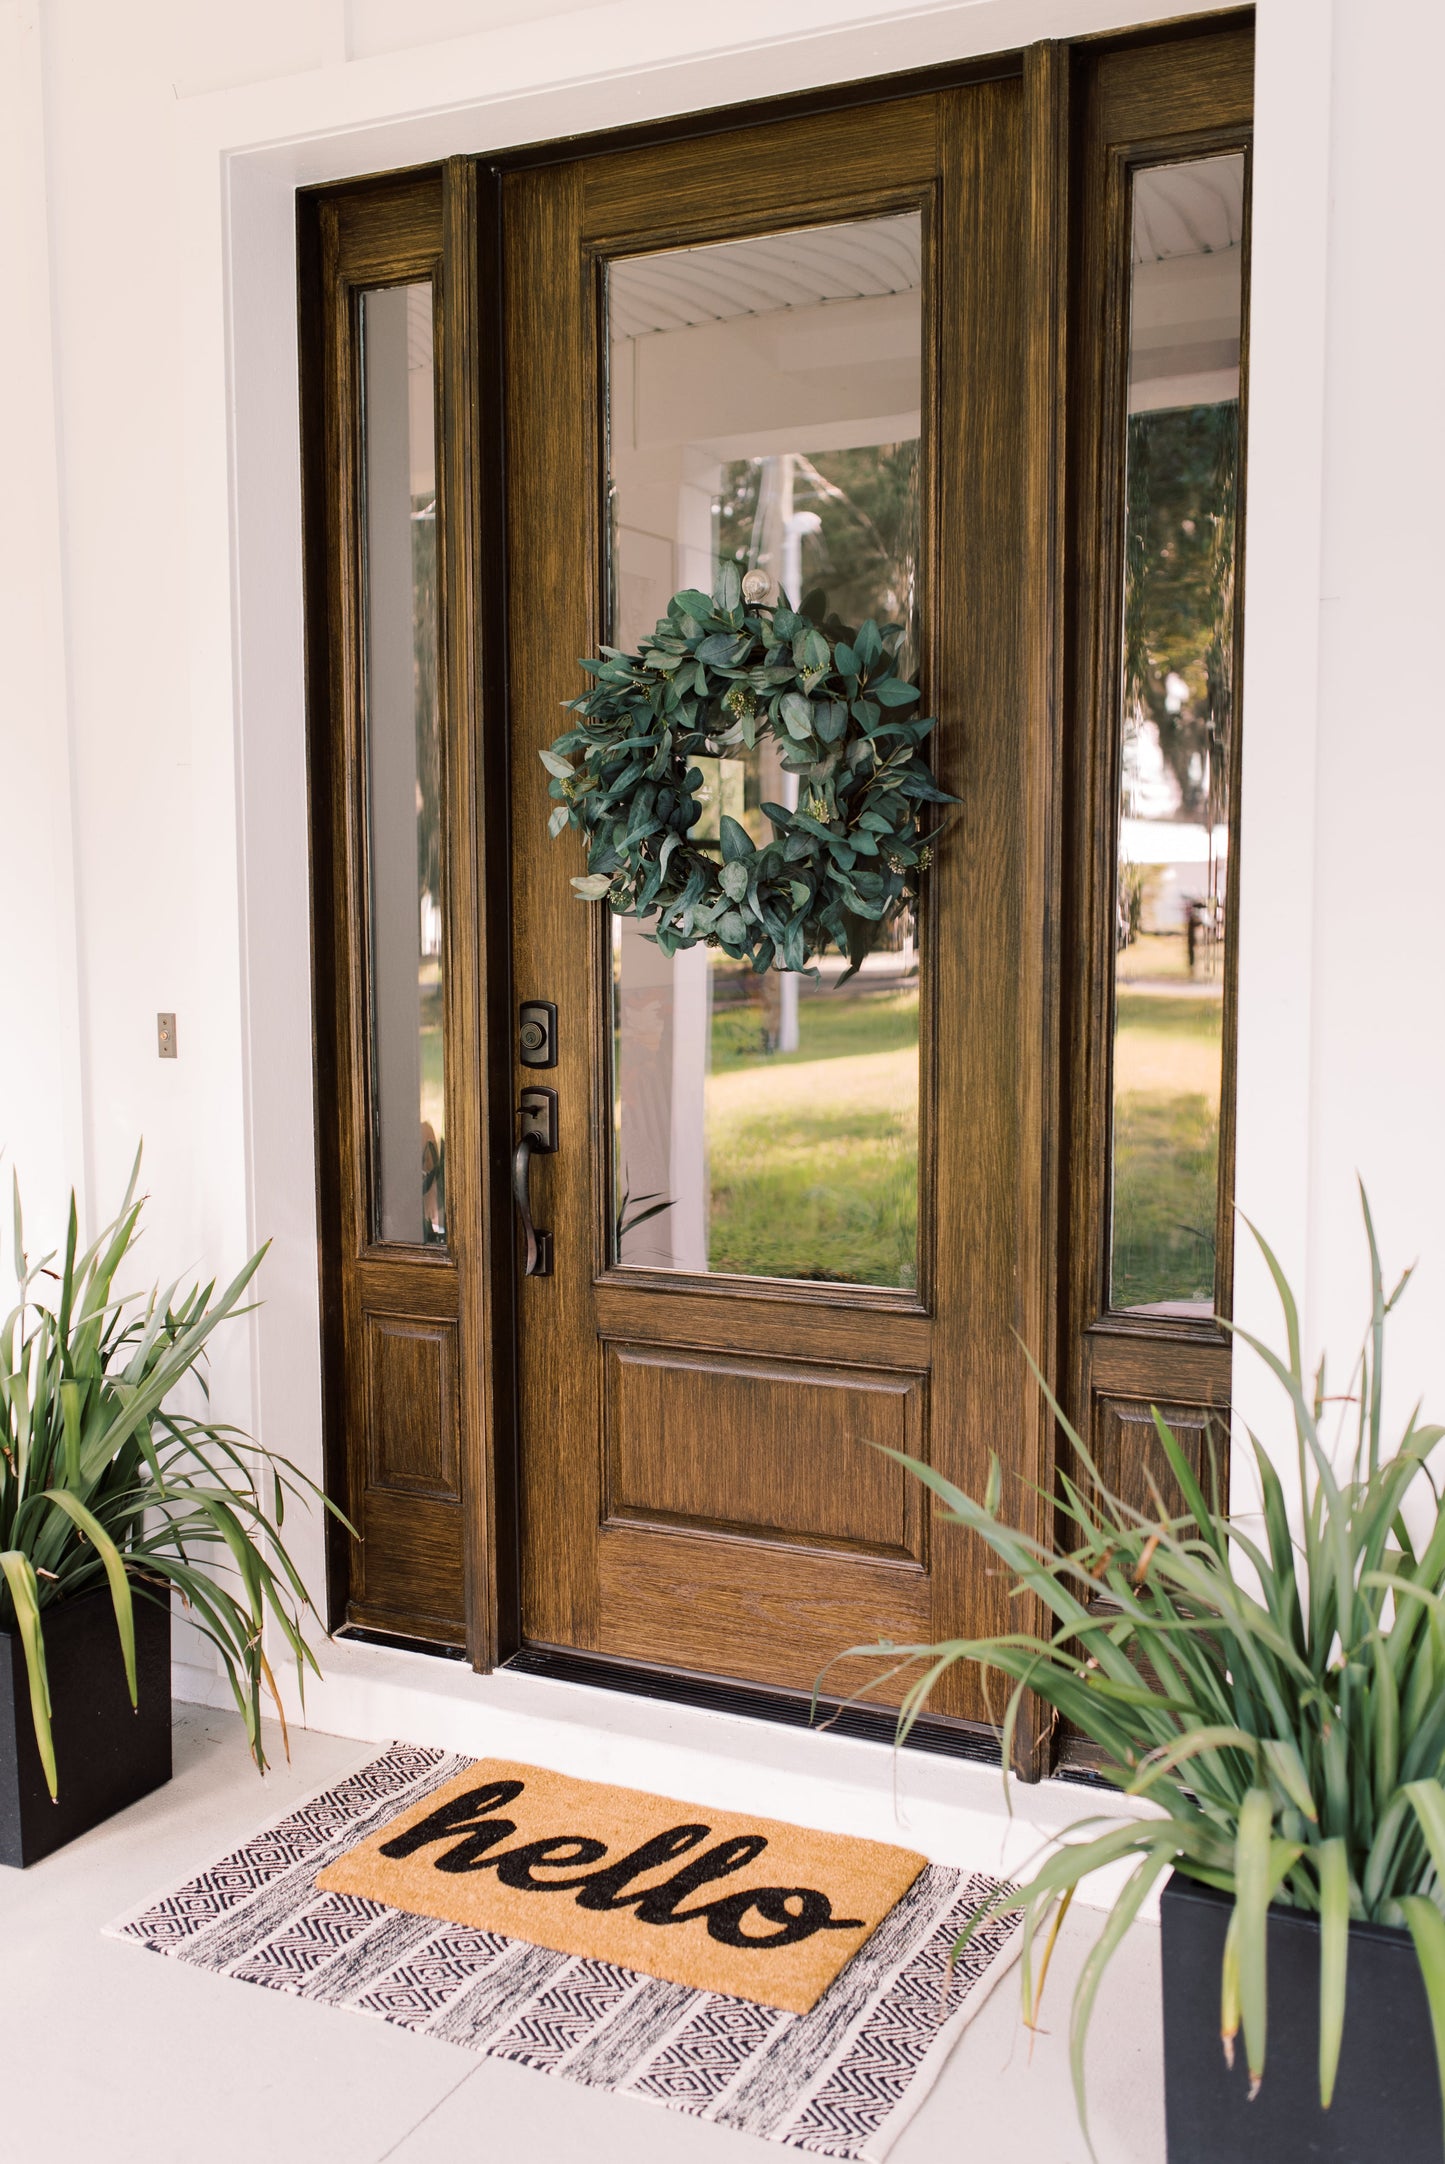 Theodore Magnus Natural Coir Doormat with non-slip backing - 17 x 30 - Outdoor / Indoor - Natural - hello